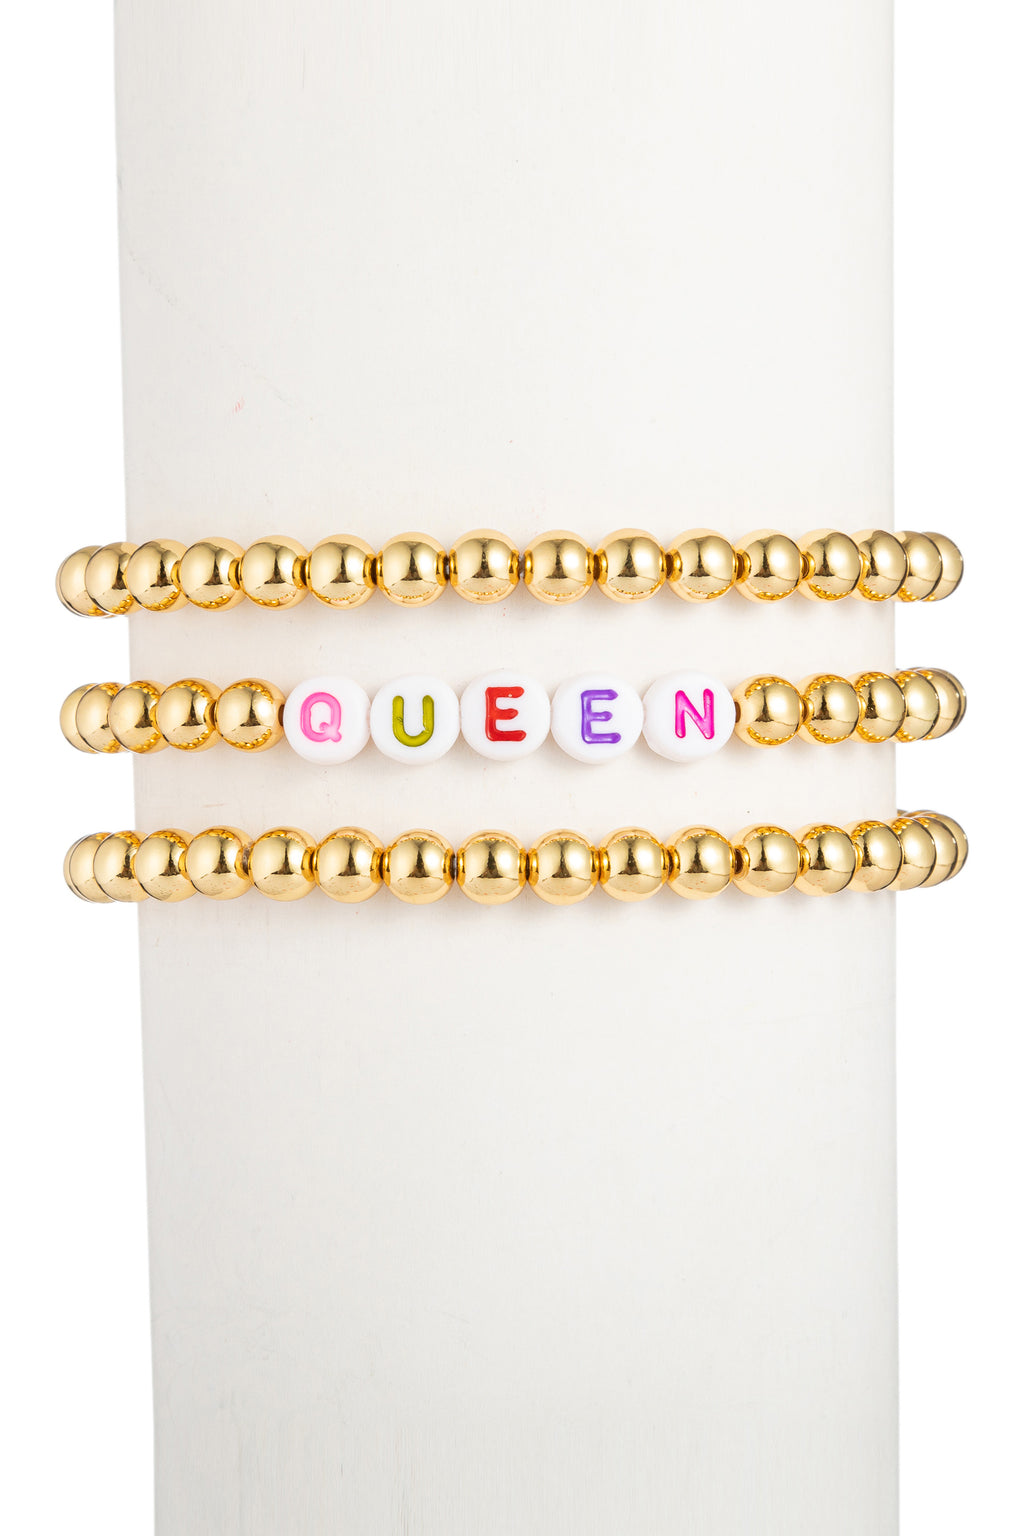 Gold tone titanium beaded bracelet set with "QUEEN" spelled beads.